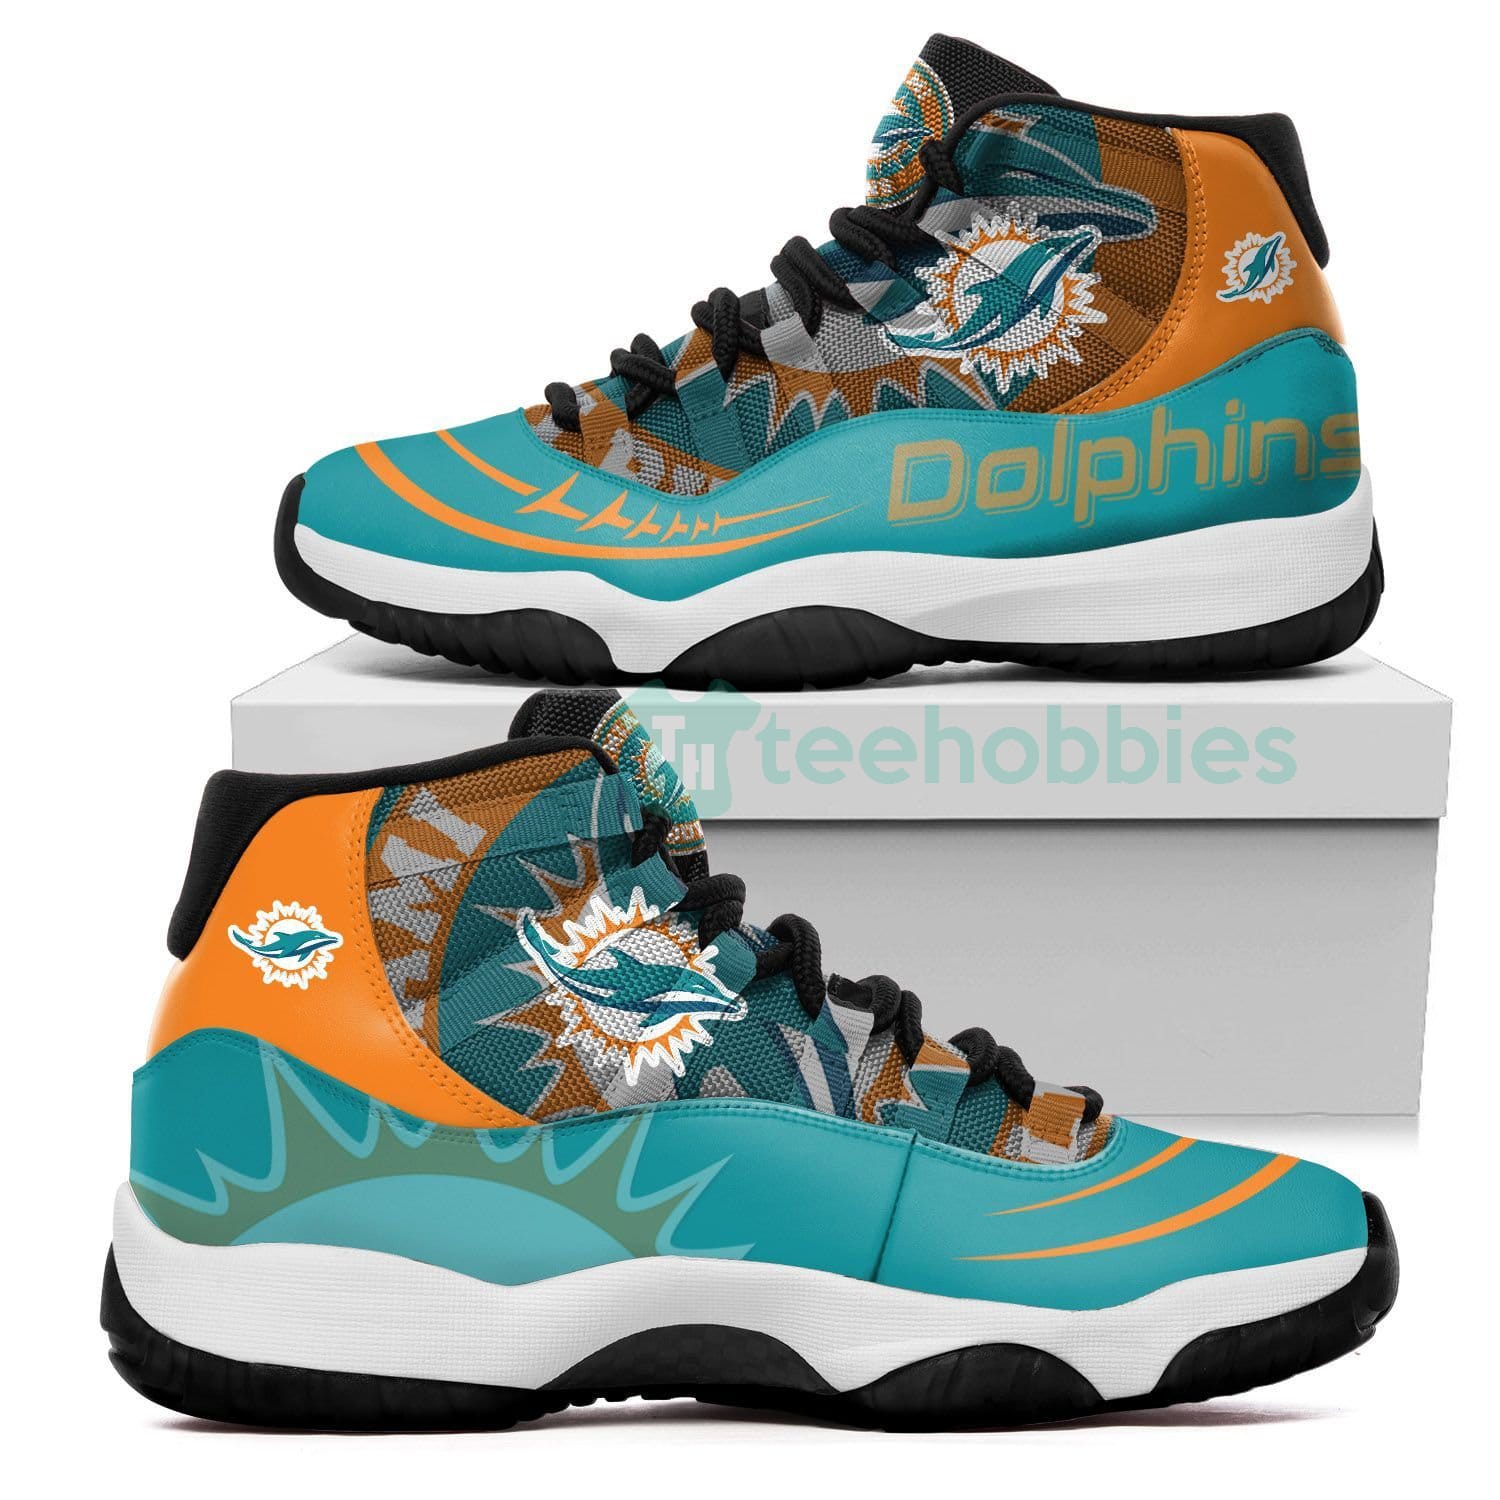 Miami Dolphins New Air Jordan 11 Shoes